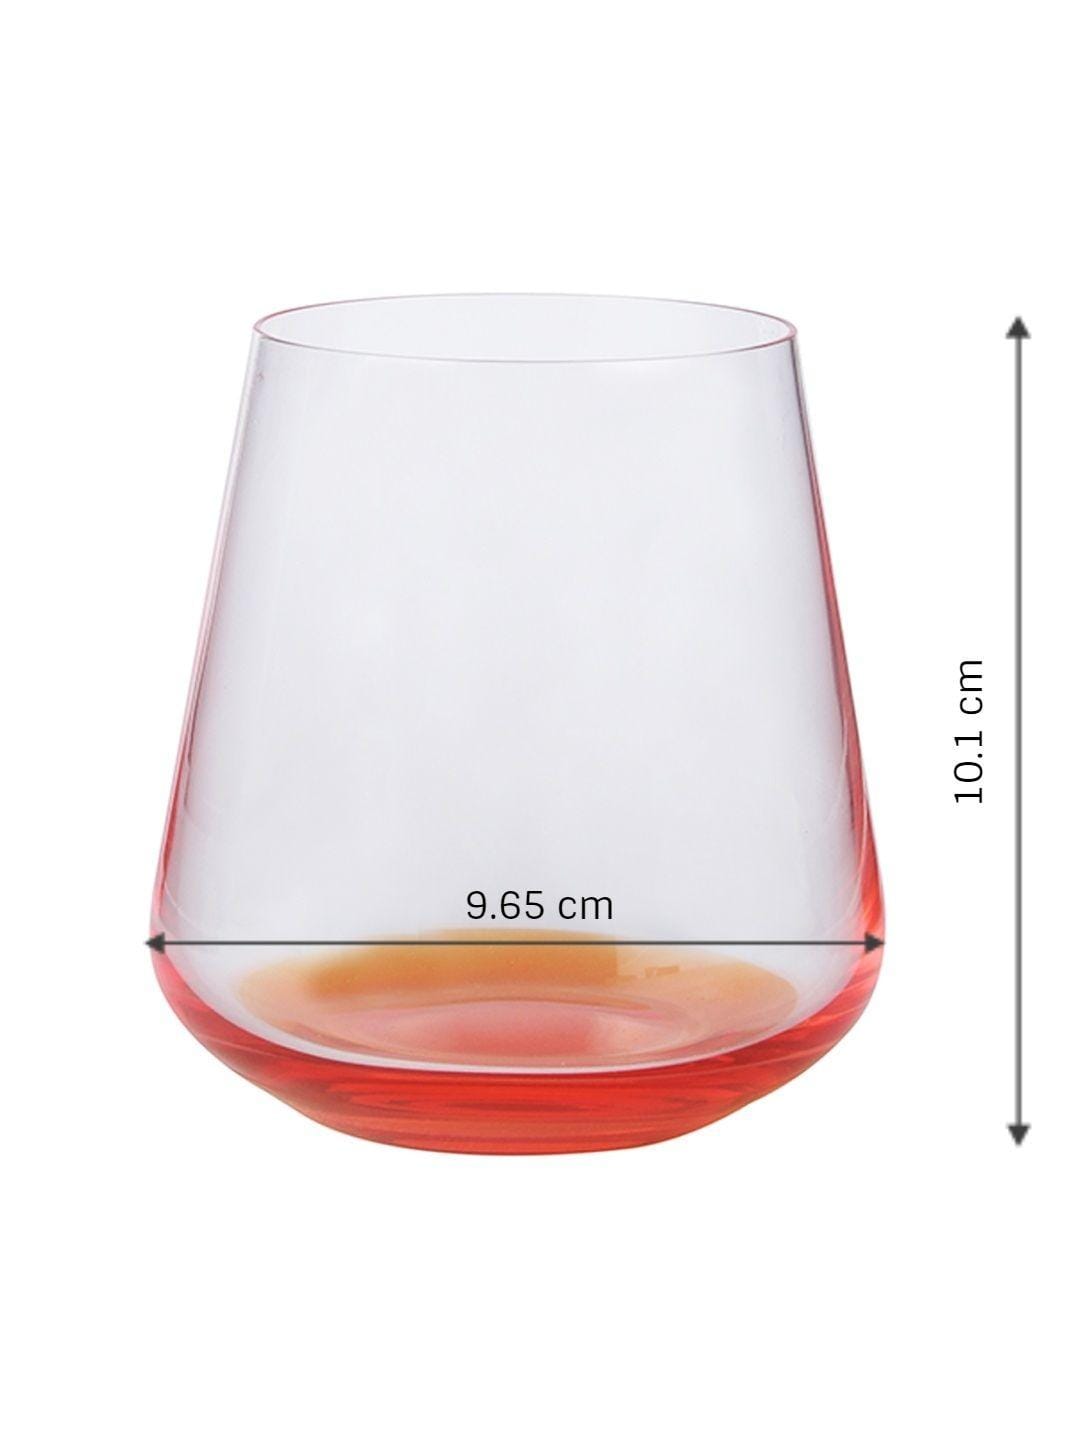 Whiskey Glass 400 ML Set of 6 Pcs, Orange Base | Bohemia Crystal Siesta | Whiskey Glass